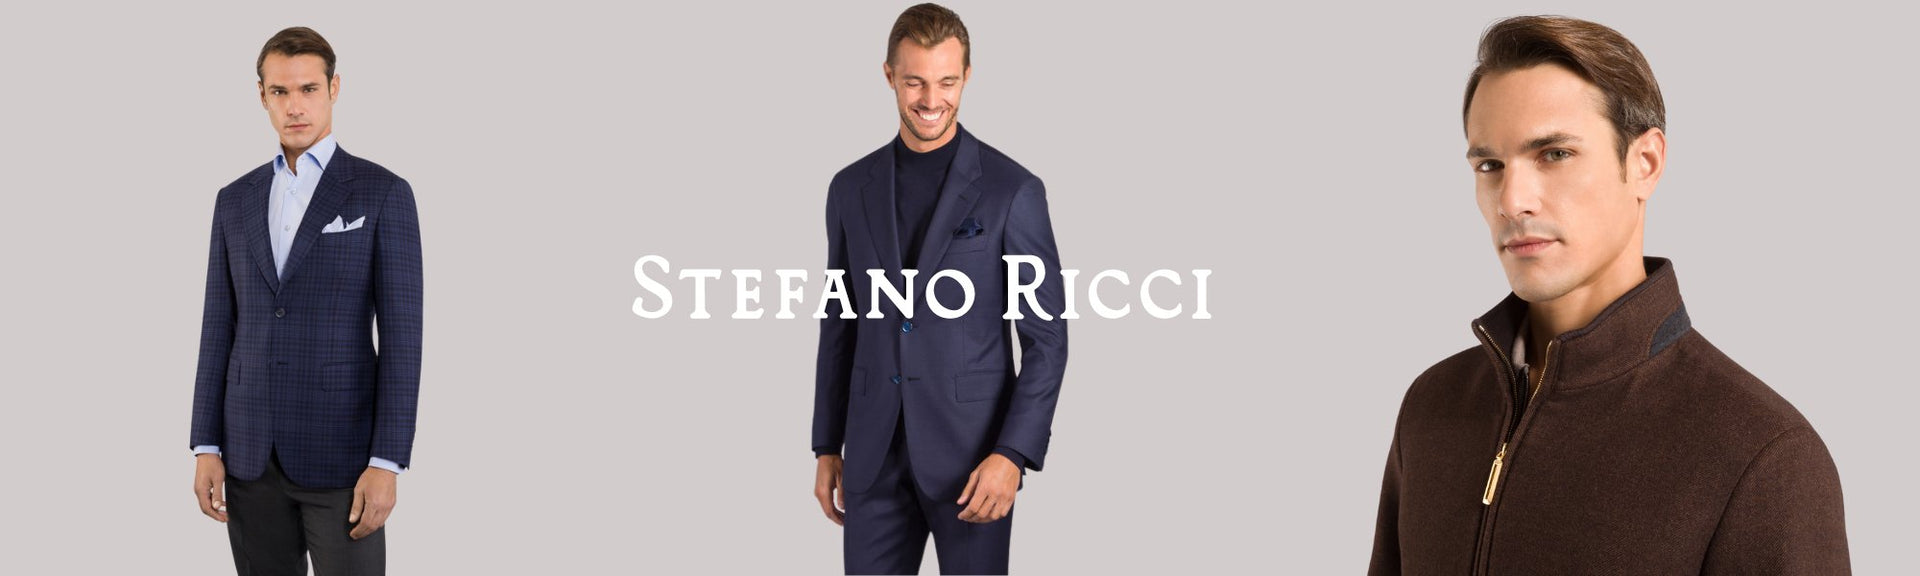 Stefano Ricci Gifts